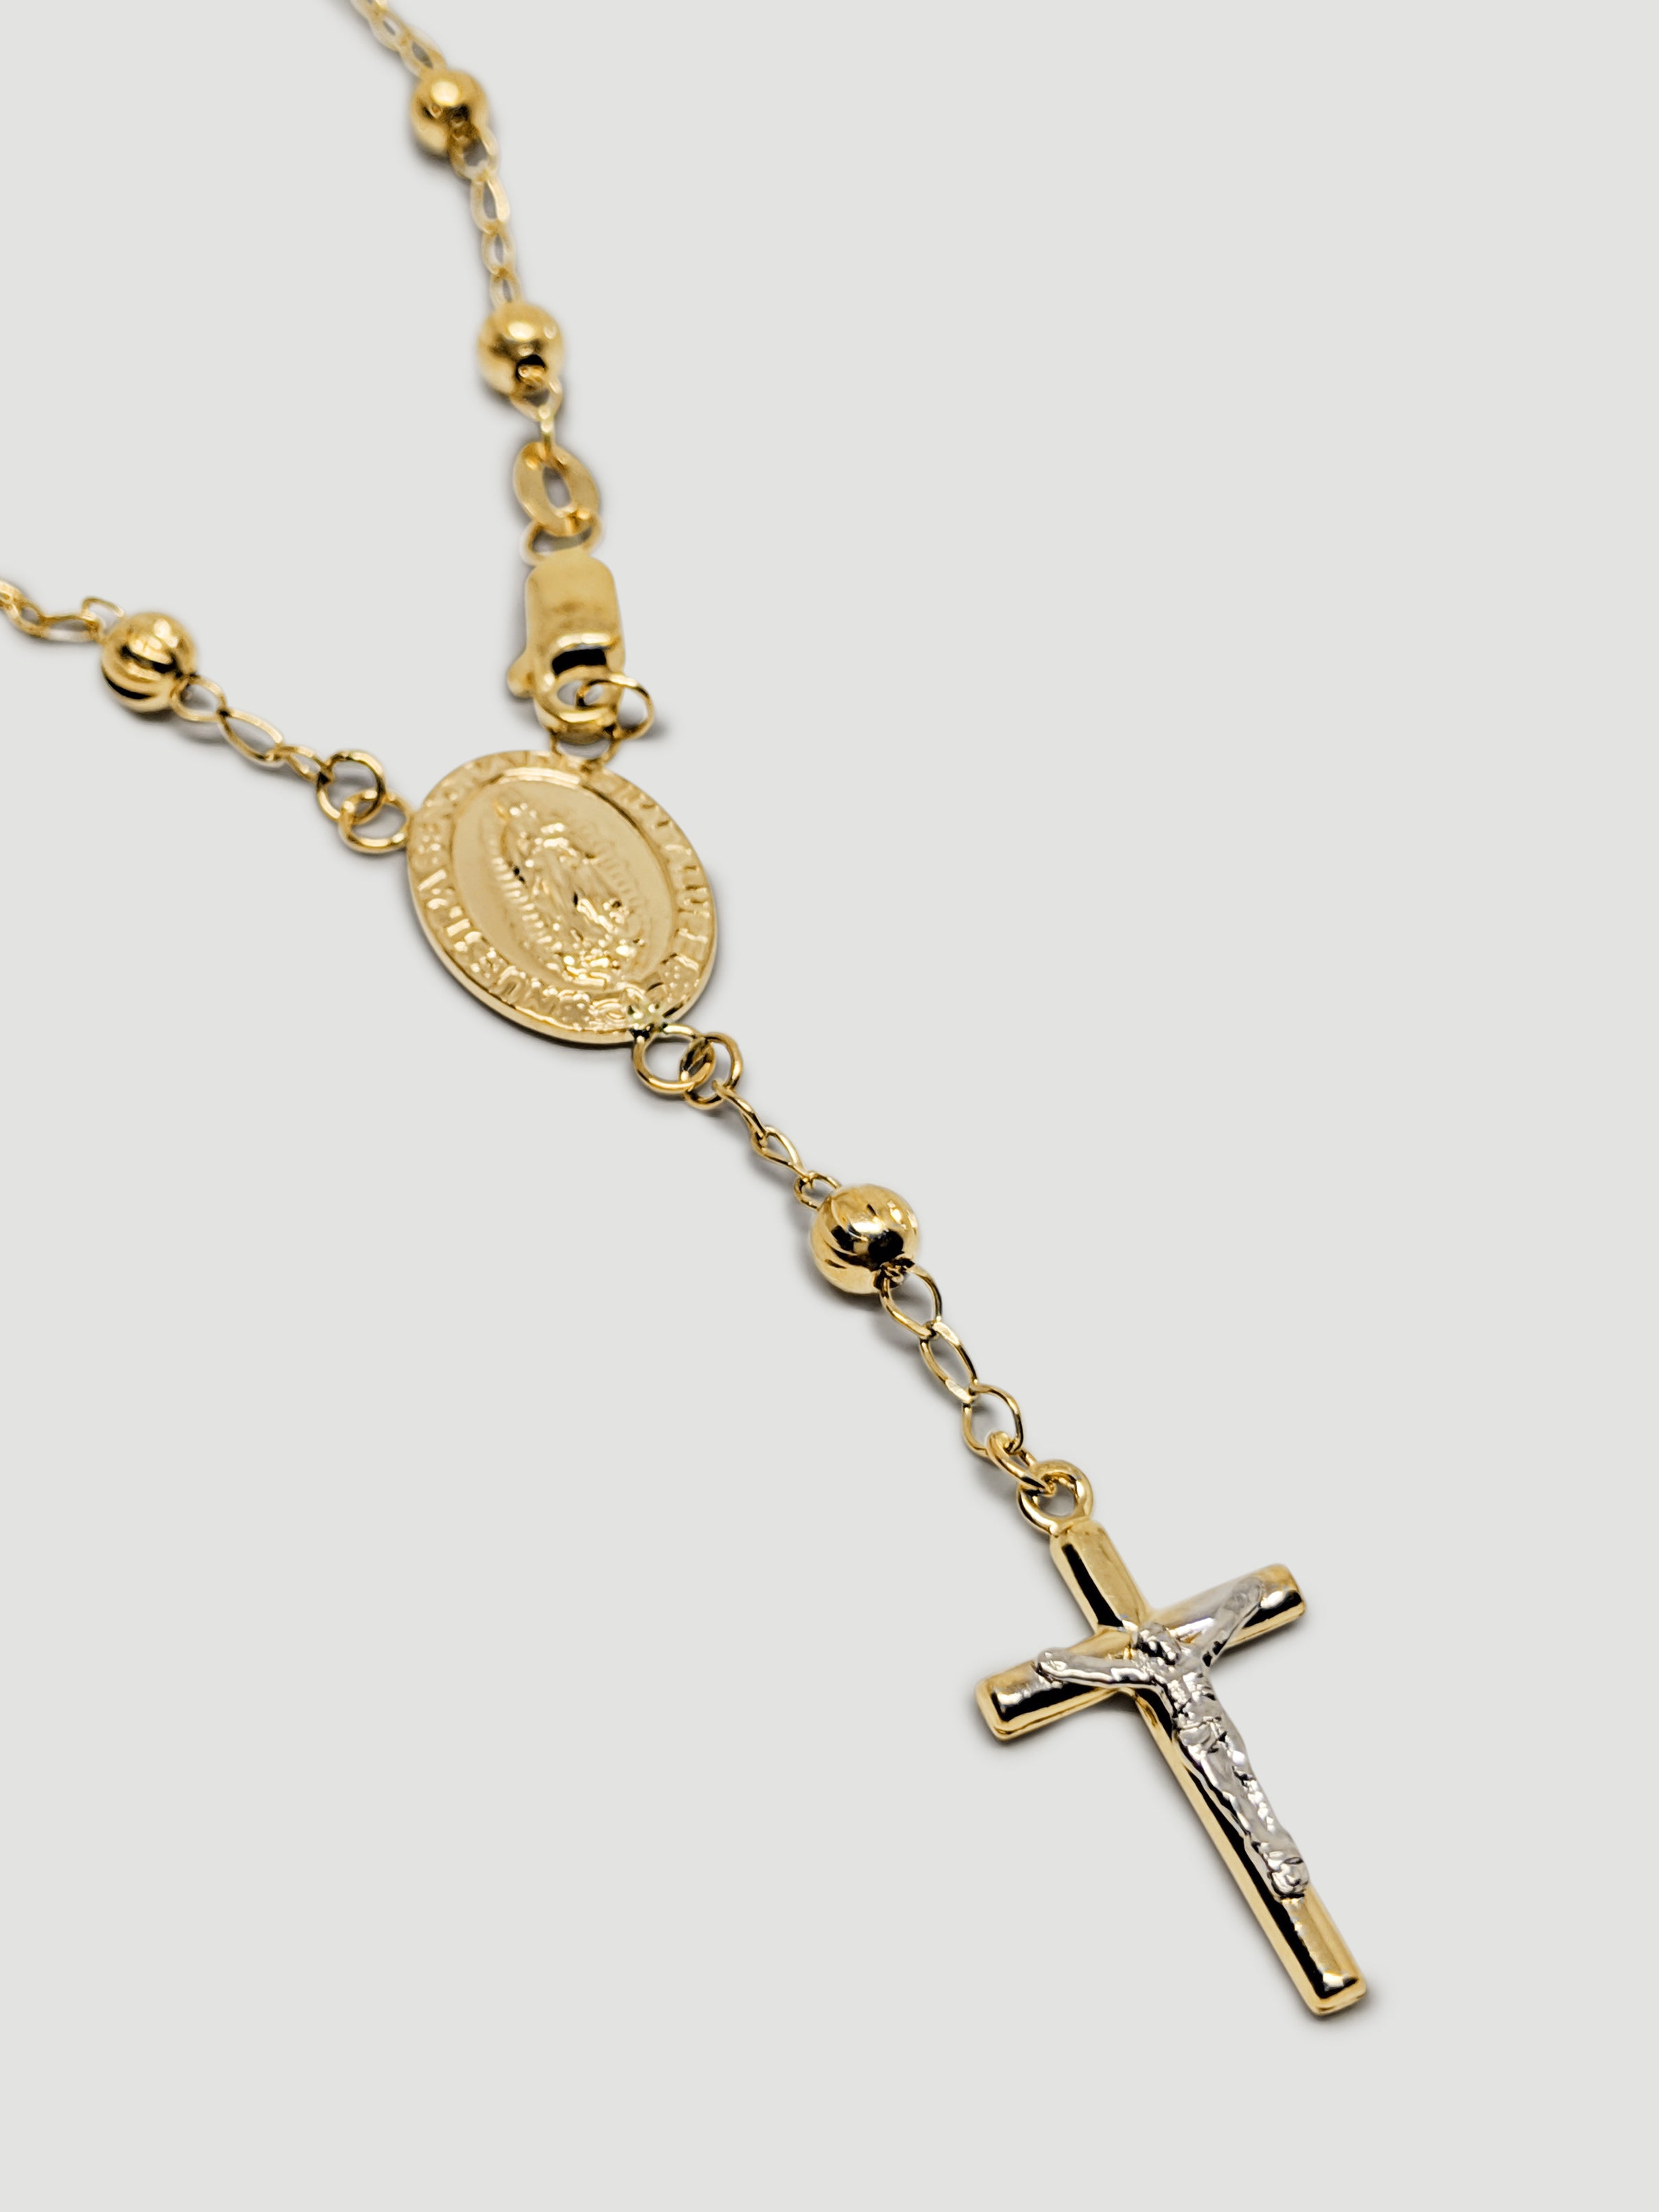 Buy Golden Rosary for Praying | Catholic Praying Rosary for Men & Women at  Amazon.in